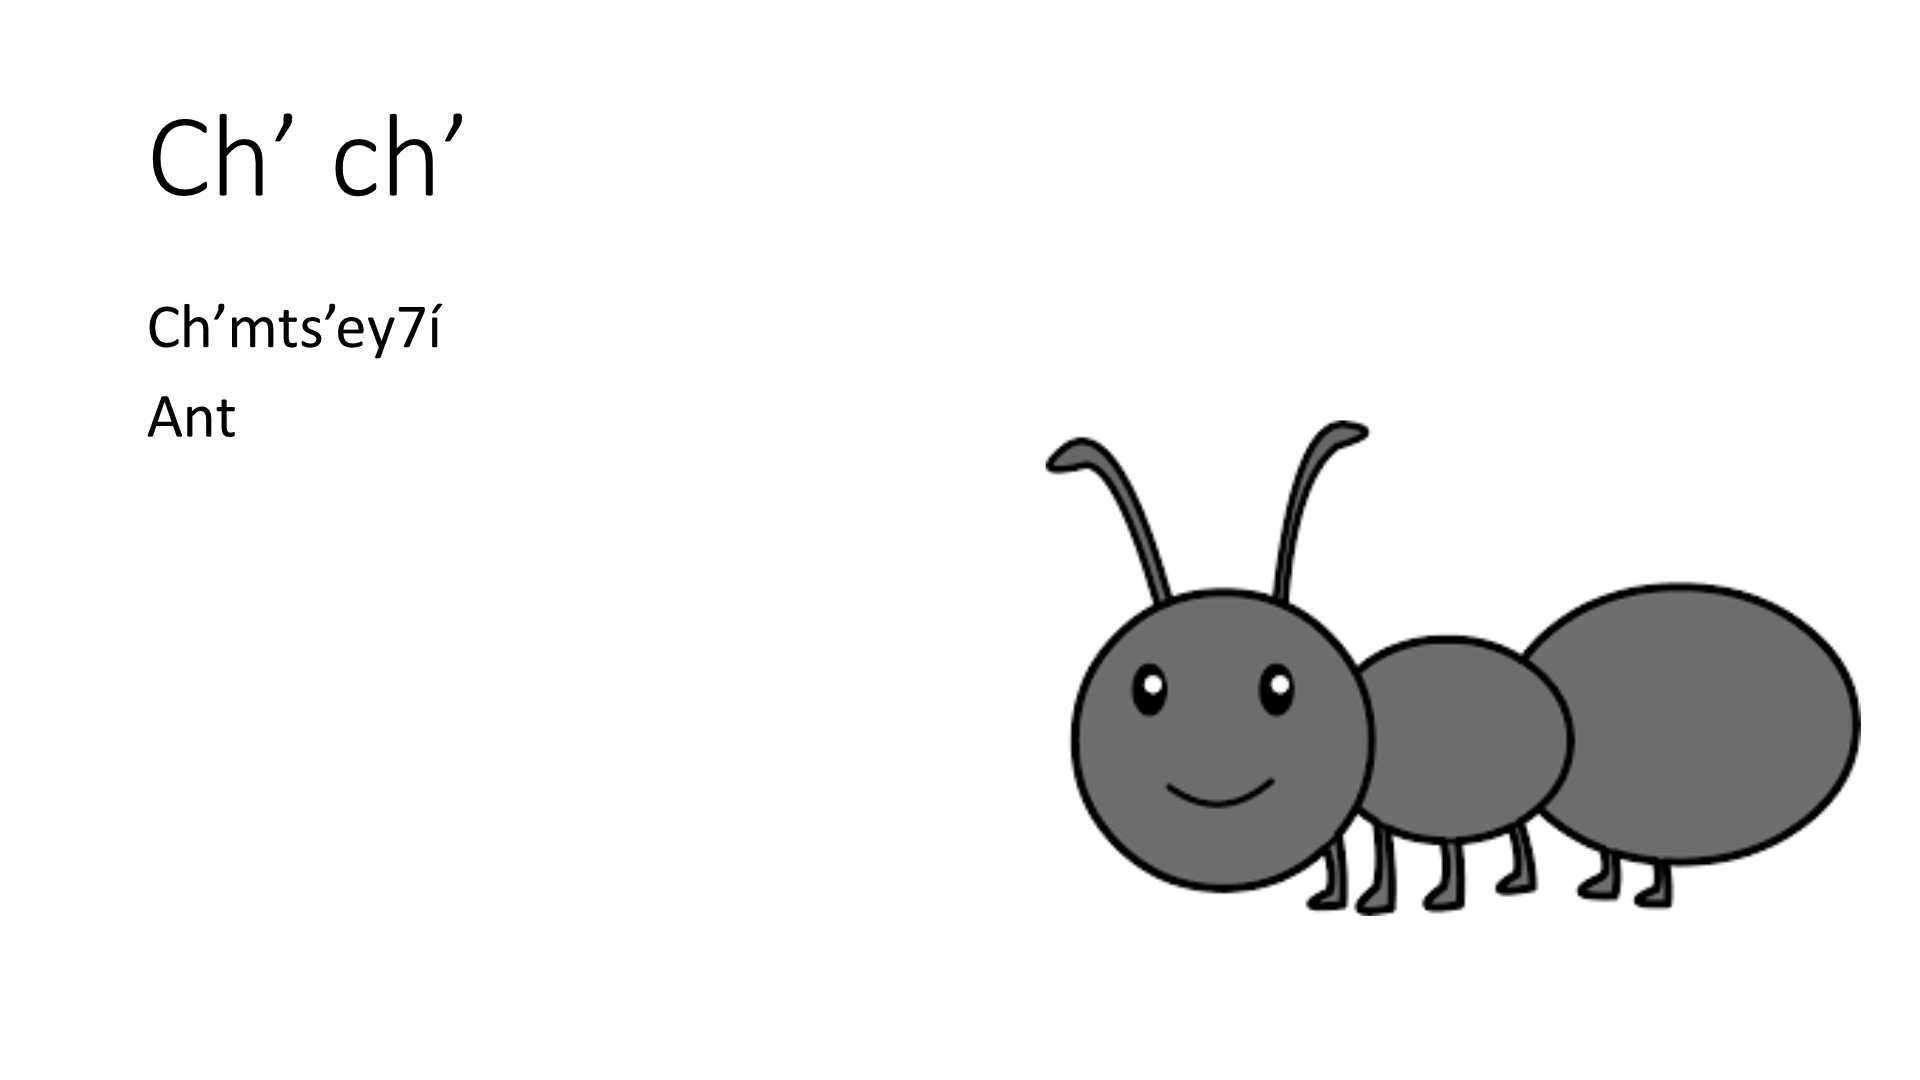 An ant illustration